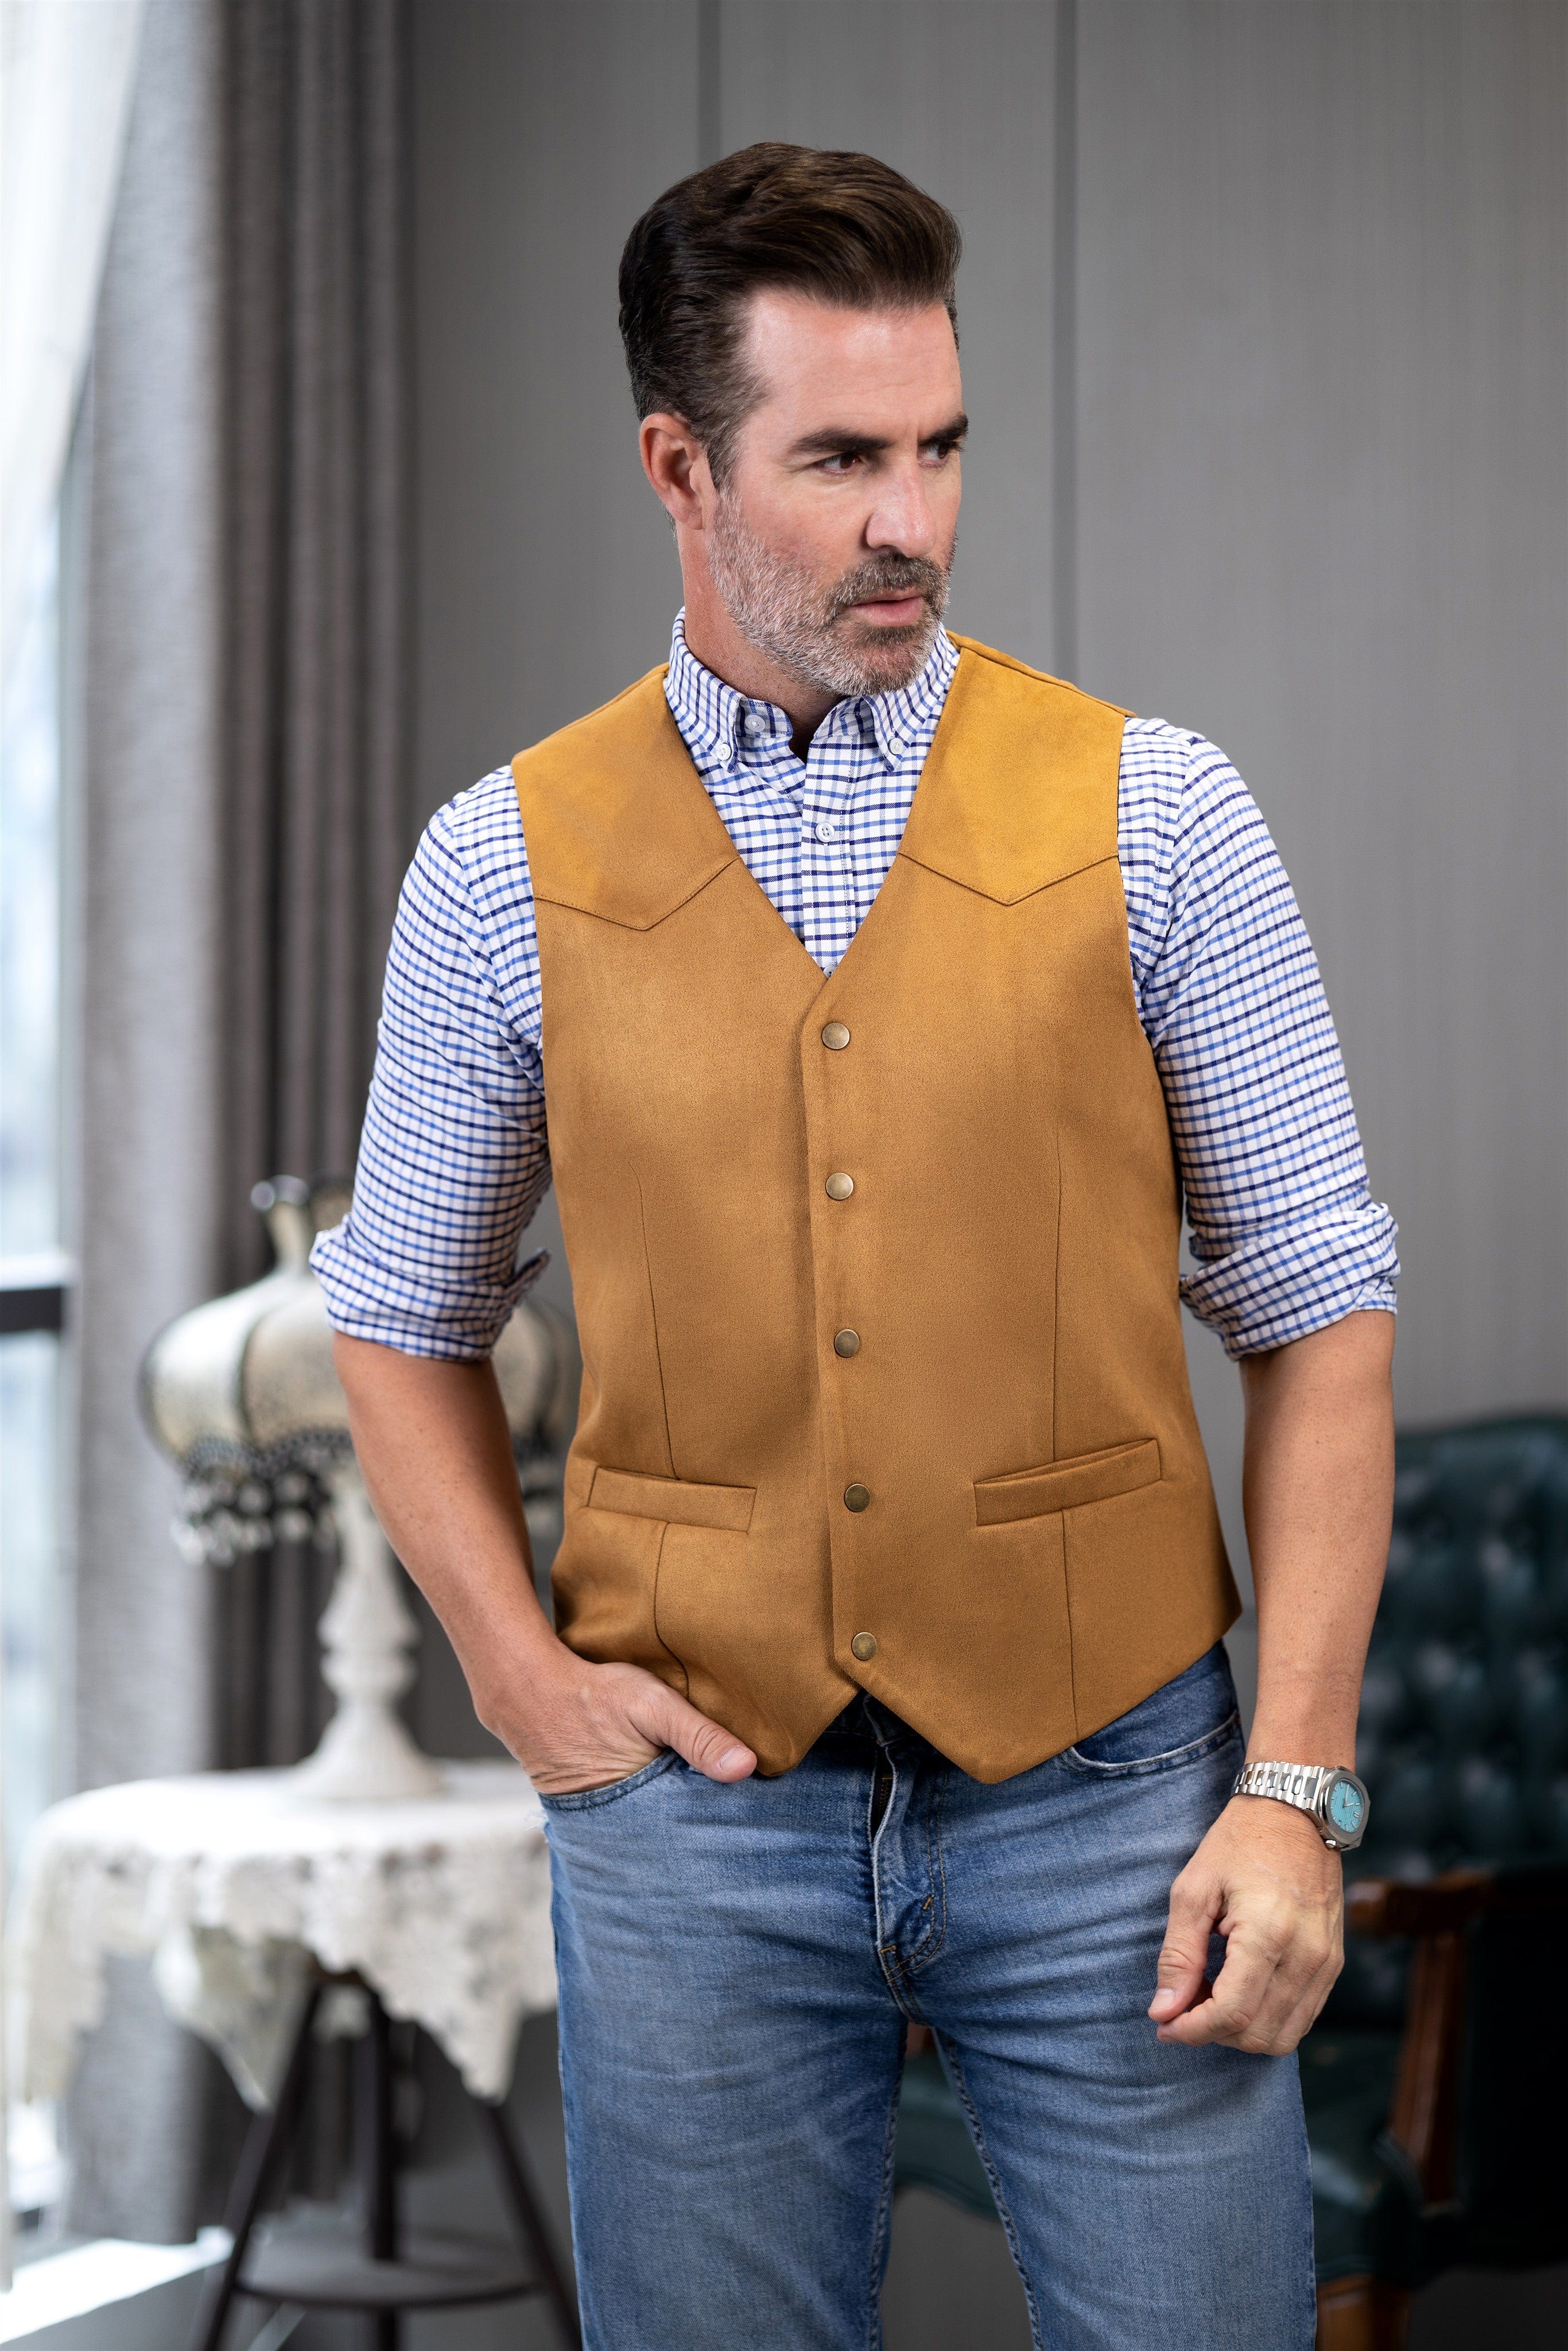 ceehuteey Casual Men's Suede Fashion Cowboy Suit Solid Vest V Neck Waistcoat